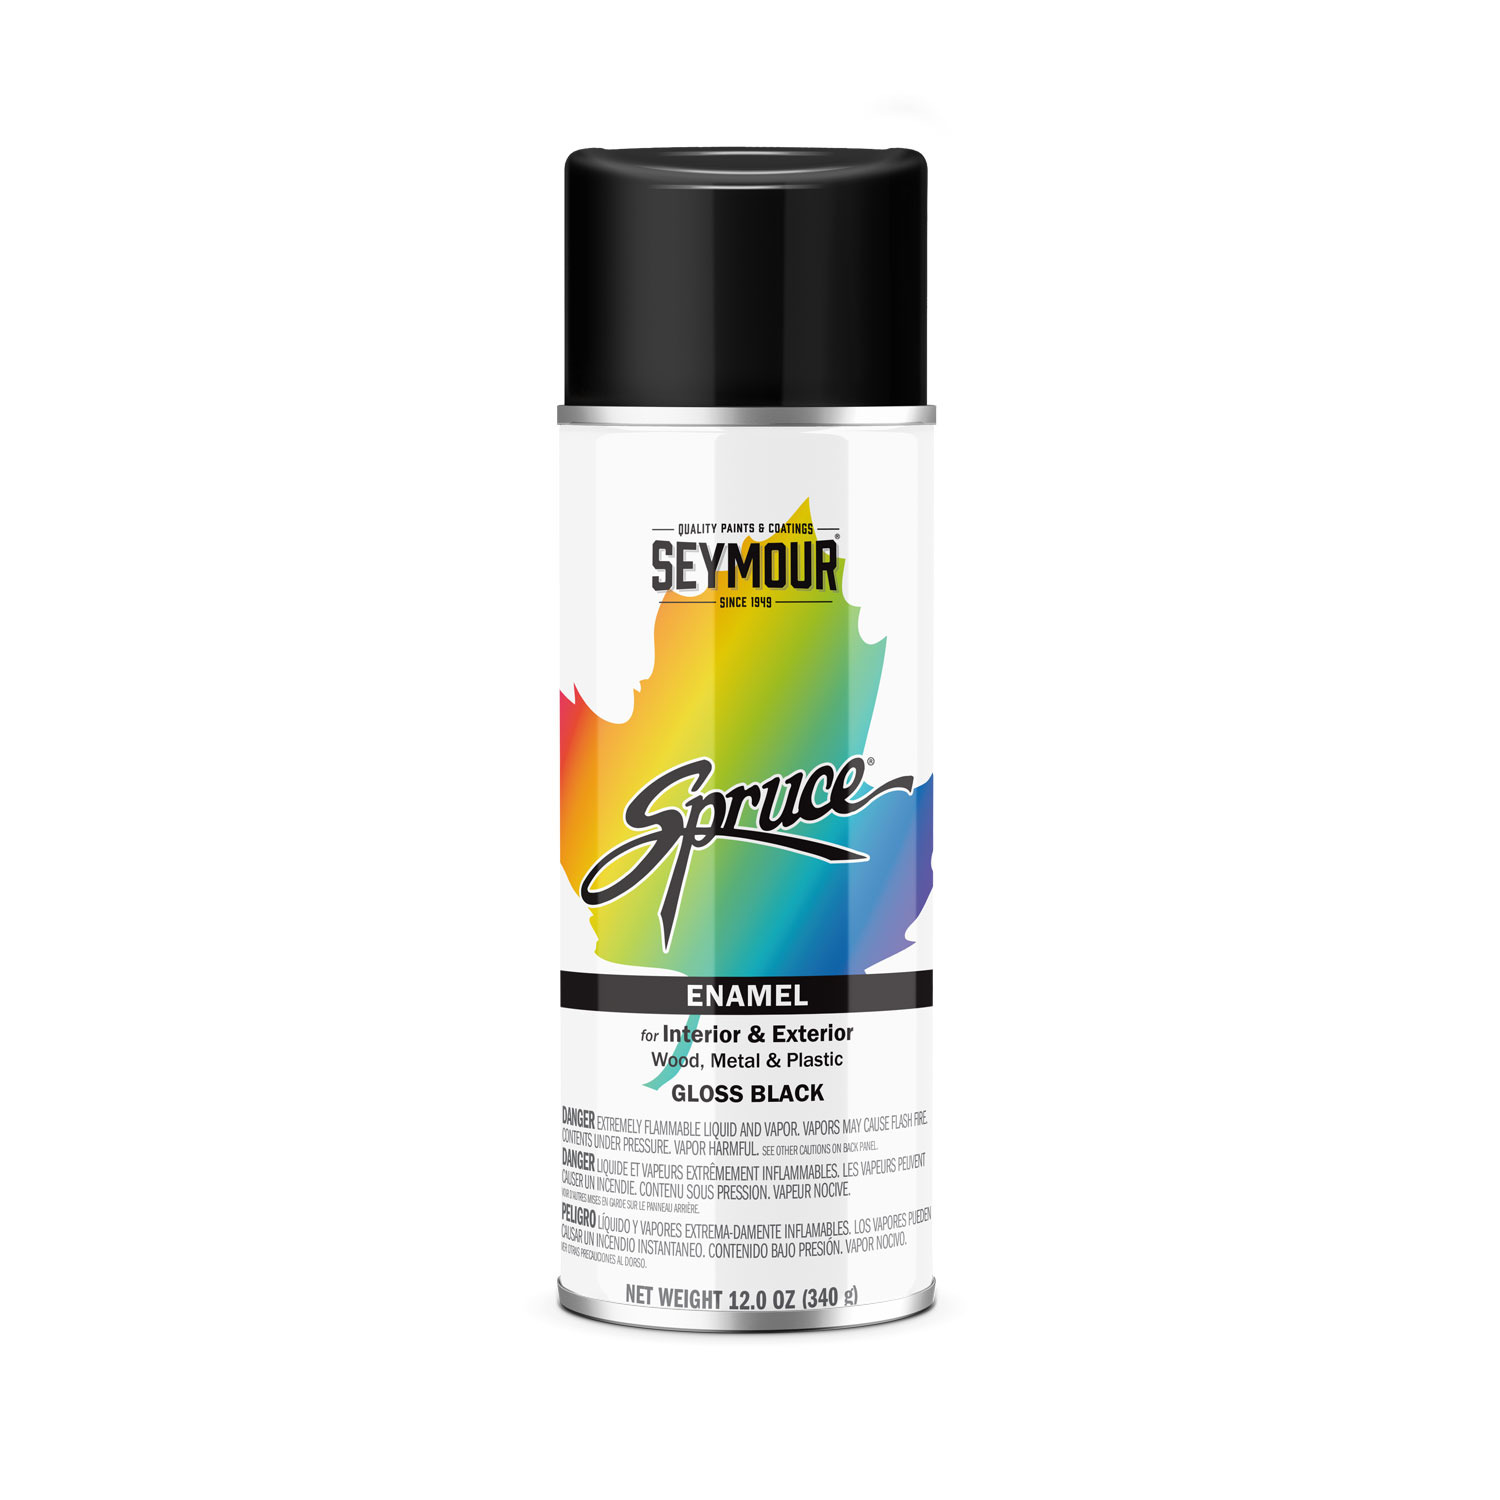 98-3 Seymour Spruce Enamel Spray Paint